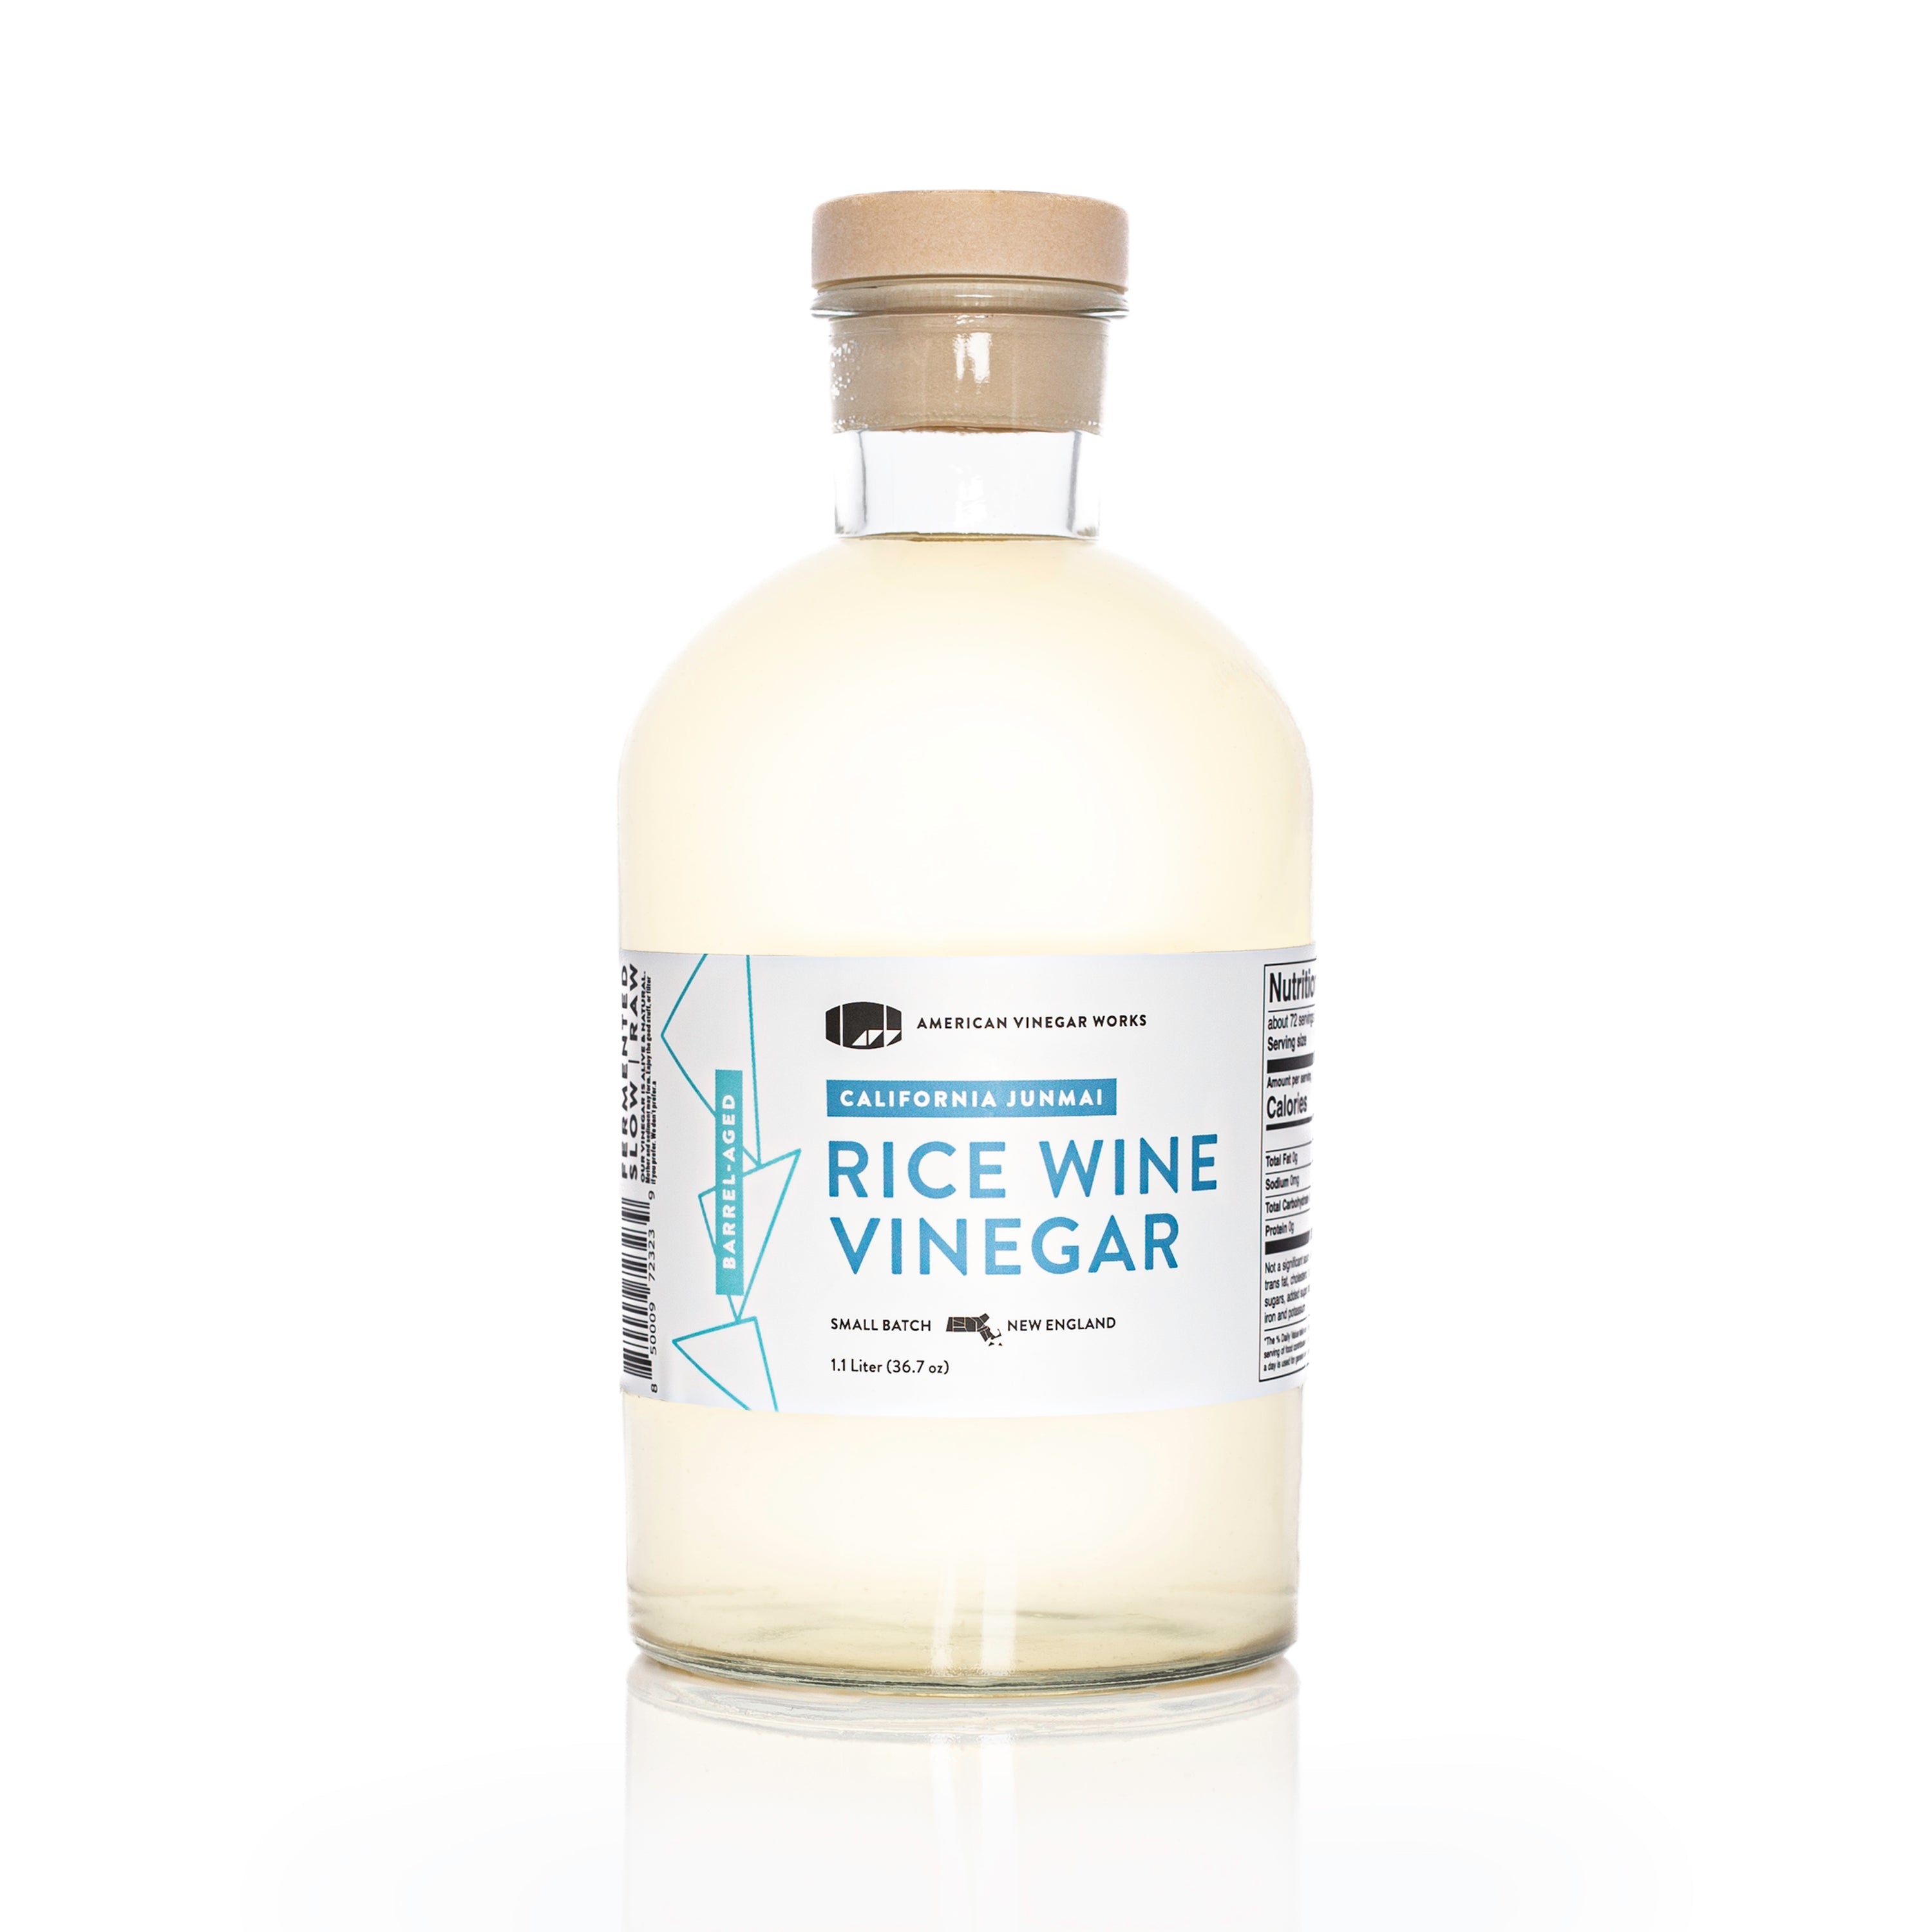 California Junmai Rice Wine Vinegar